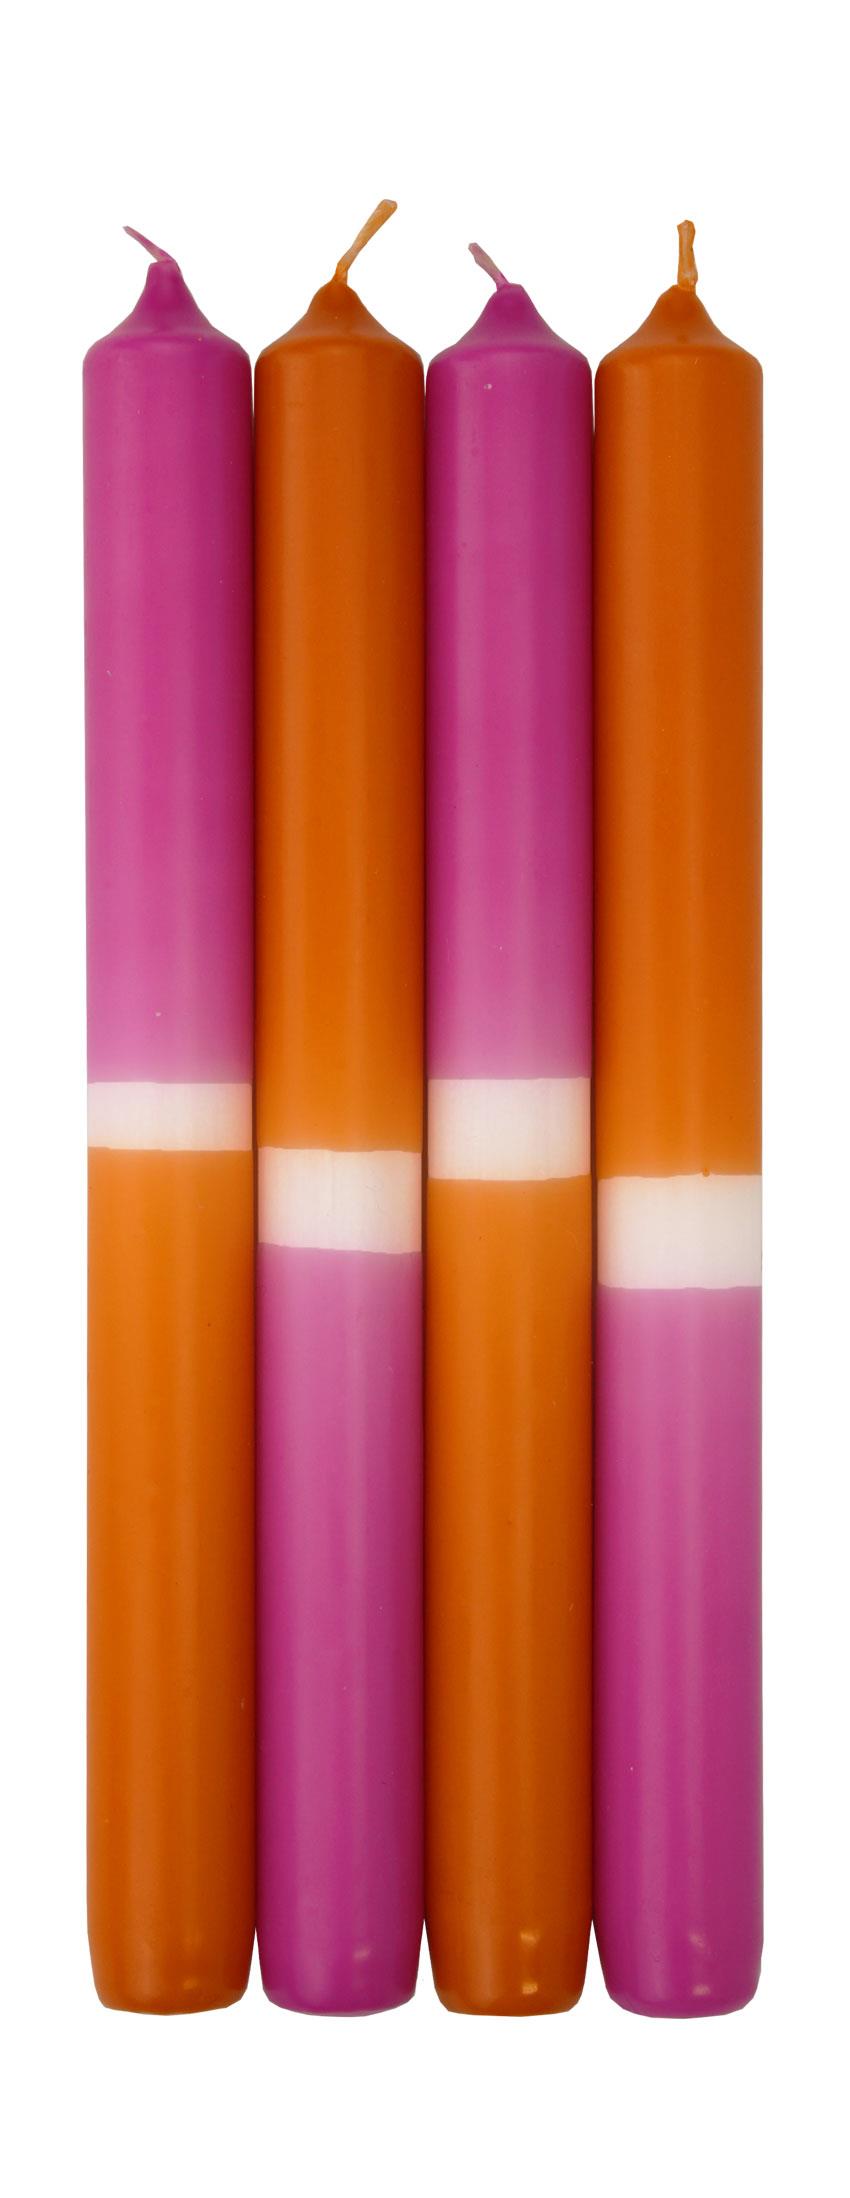 4x Dip Dye Candles 031 Pink - 089 Aprikose 250/23mm (Sortiert)